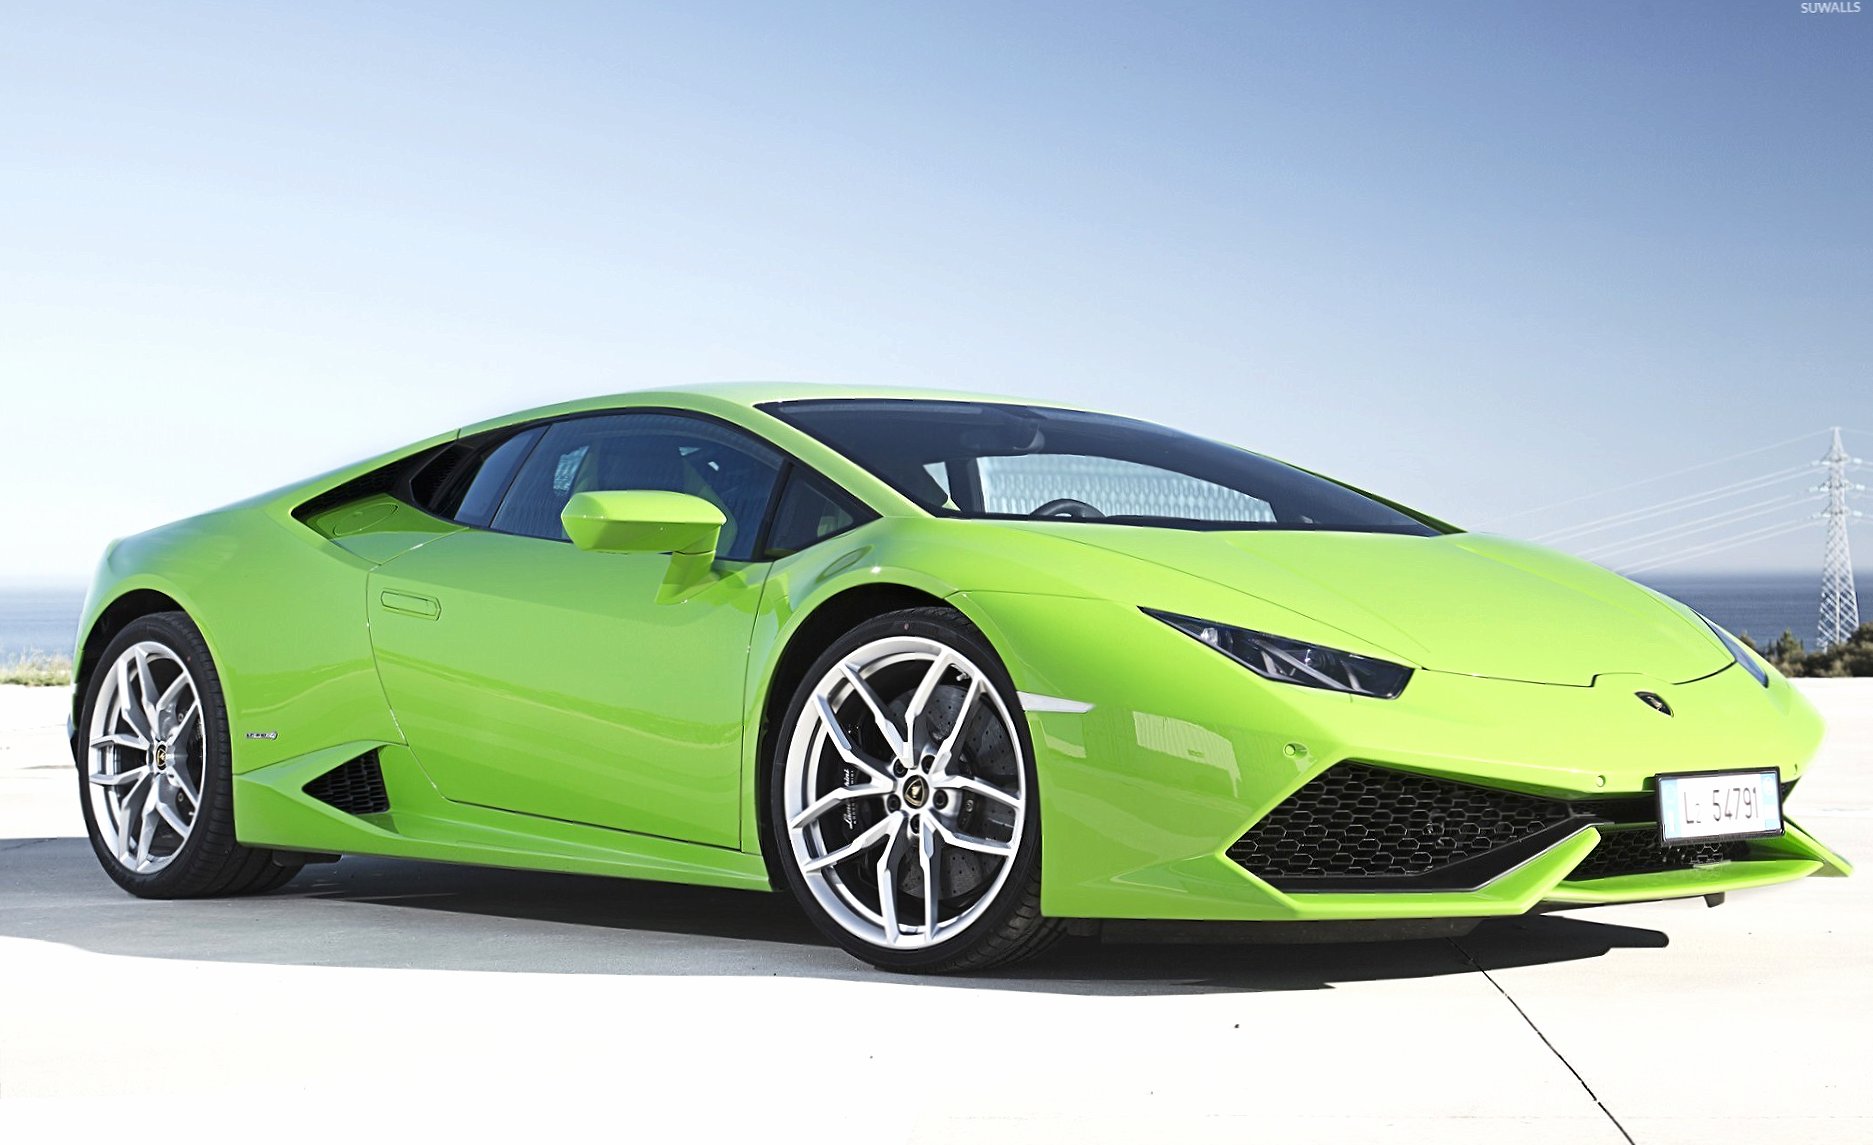 2014 Green Lamborghini Huracan at 320 x 480 iPhone size wallpapers HD quality